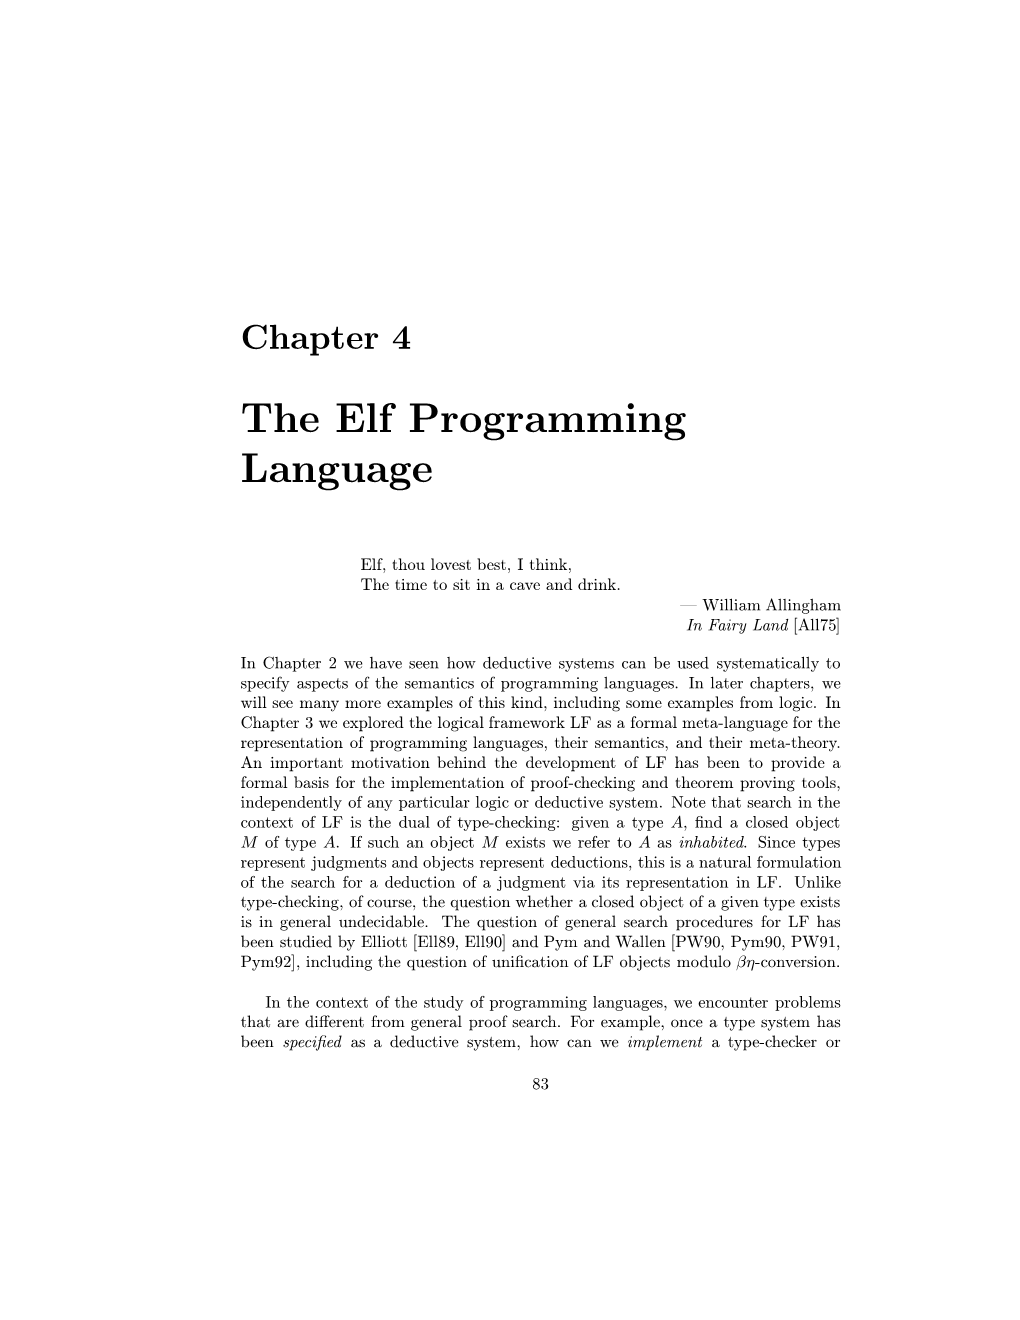 The Elf Programming Language